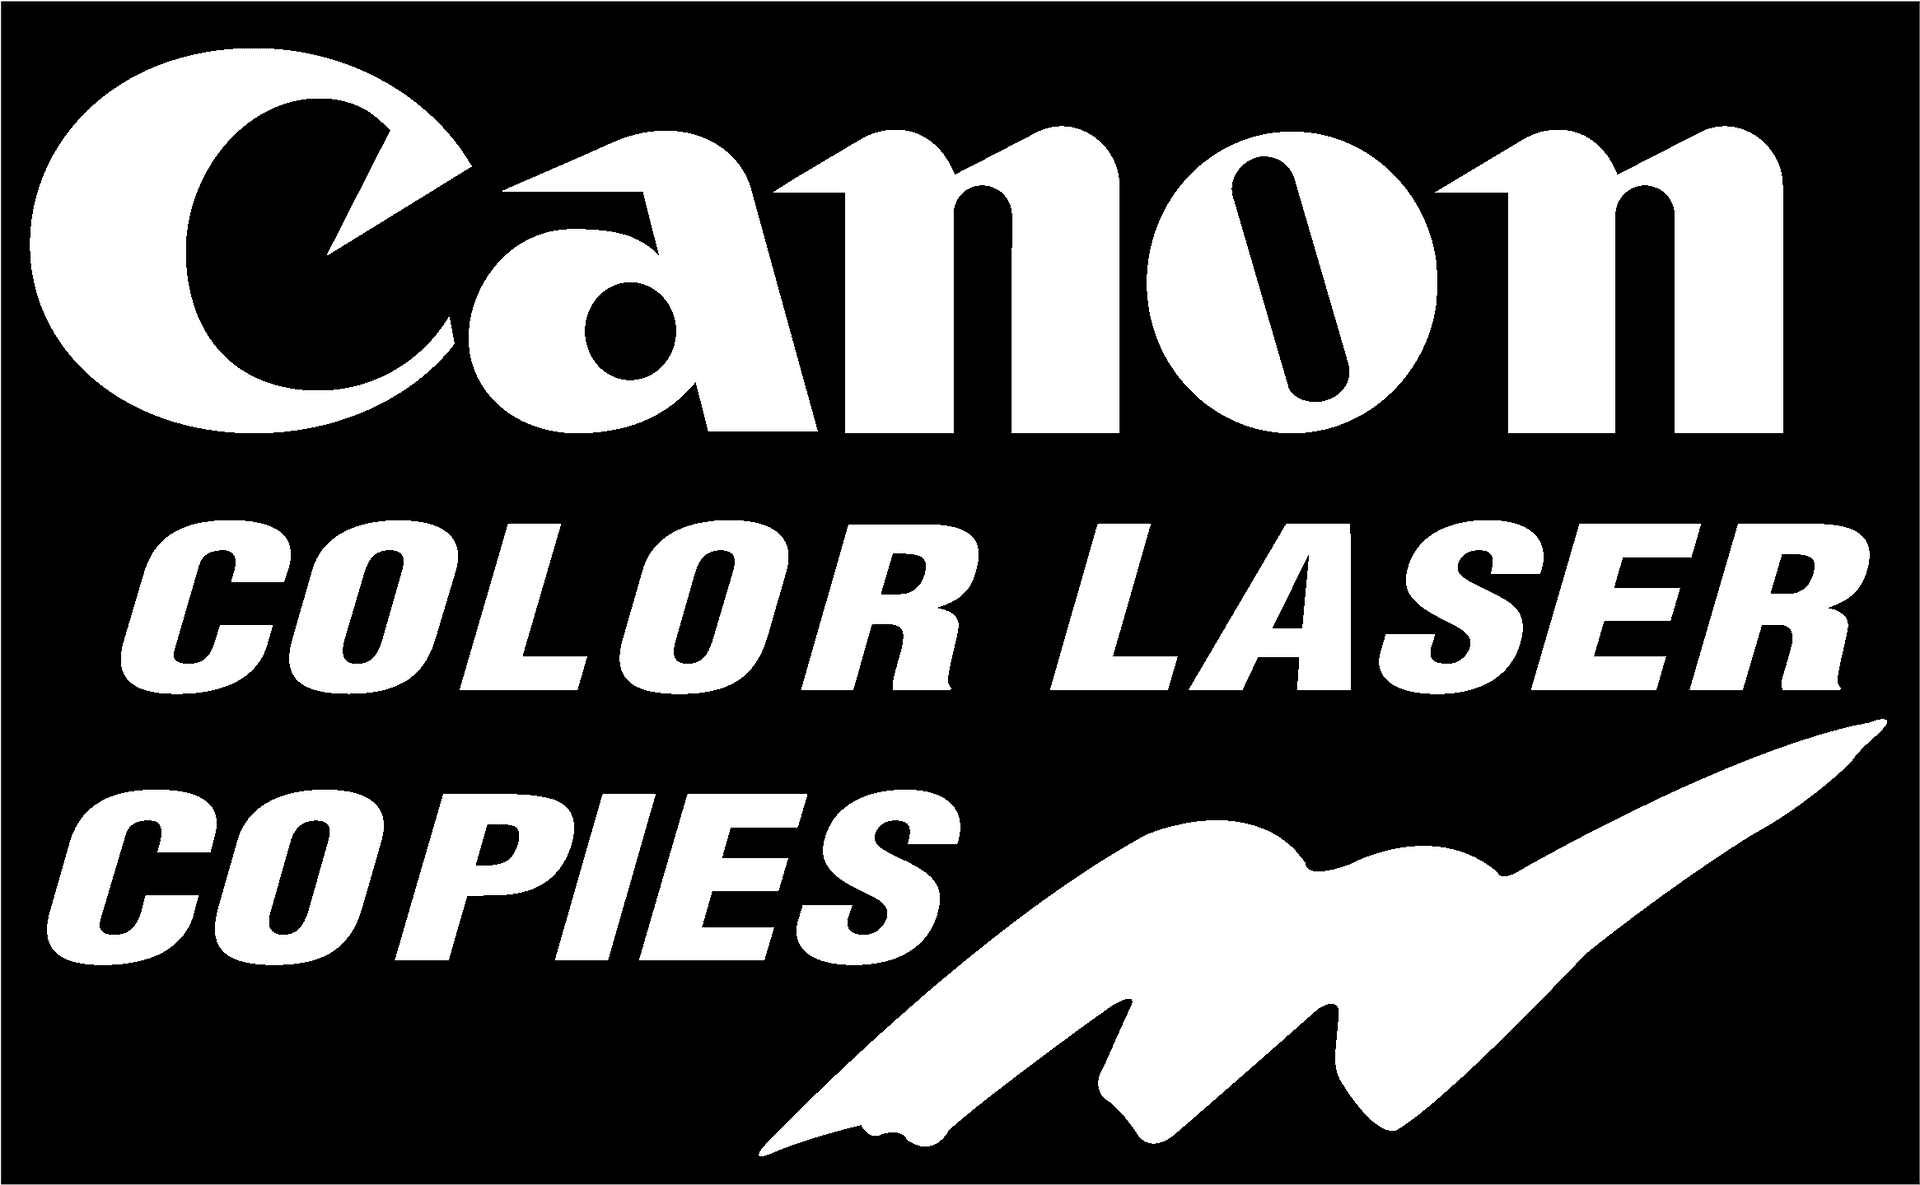 Canon Color Laser Copies Logo PNG